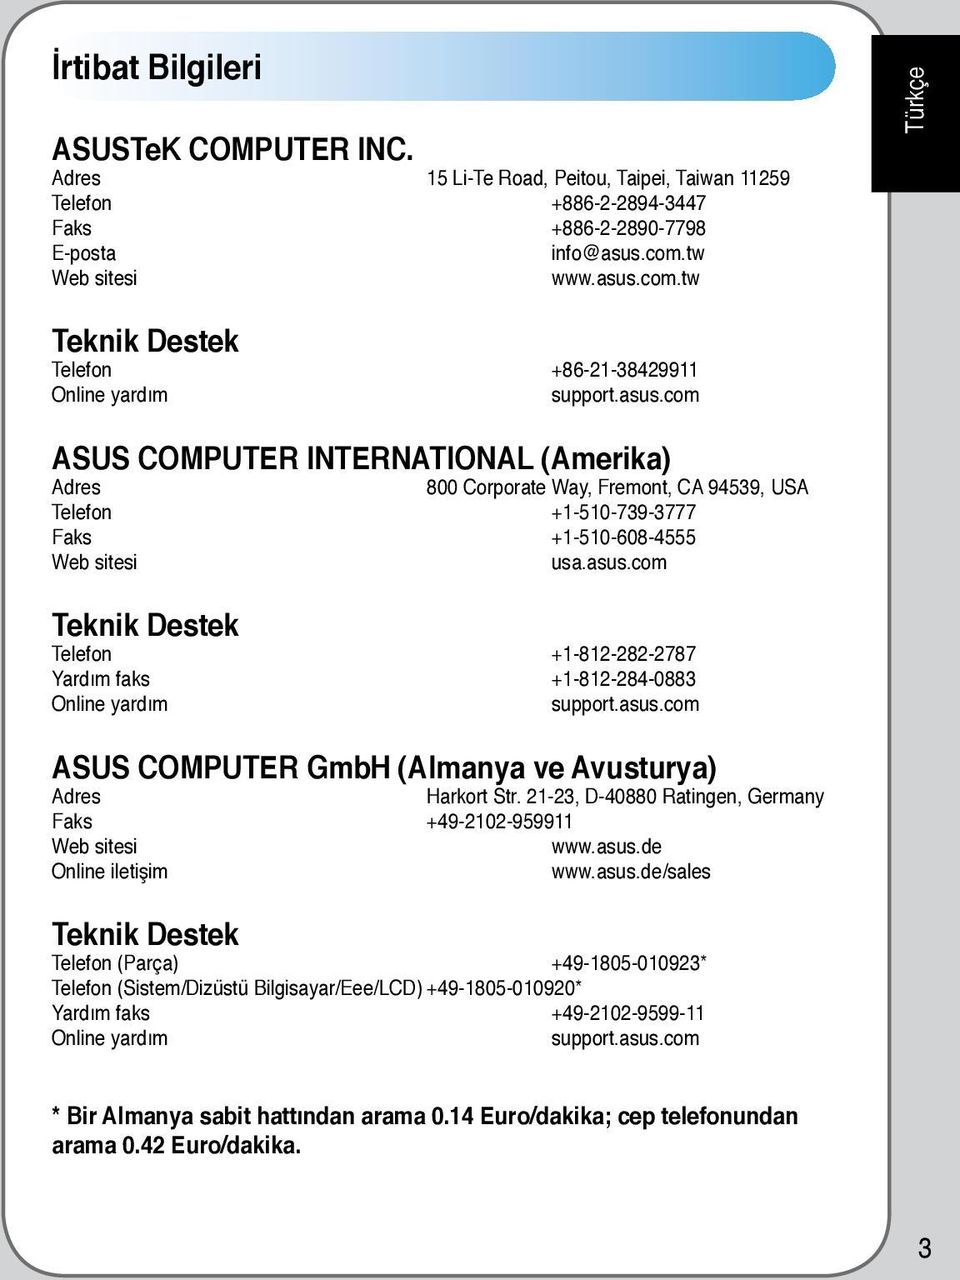 asus.com Teknik Destek Telefon +1-812-282-2787 Yardım faks +1-812-284-0883 Online yardım support.asus.com ASUS COMPUTER GmbH (Almanya ve Avusturya) Adres Harkort Str.